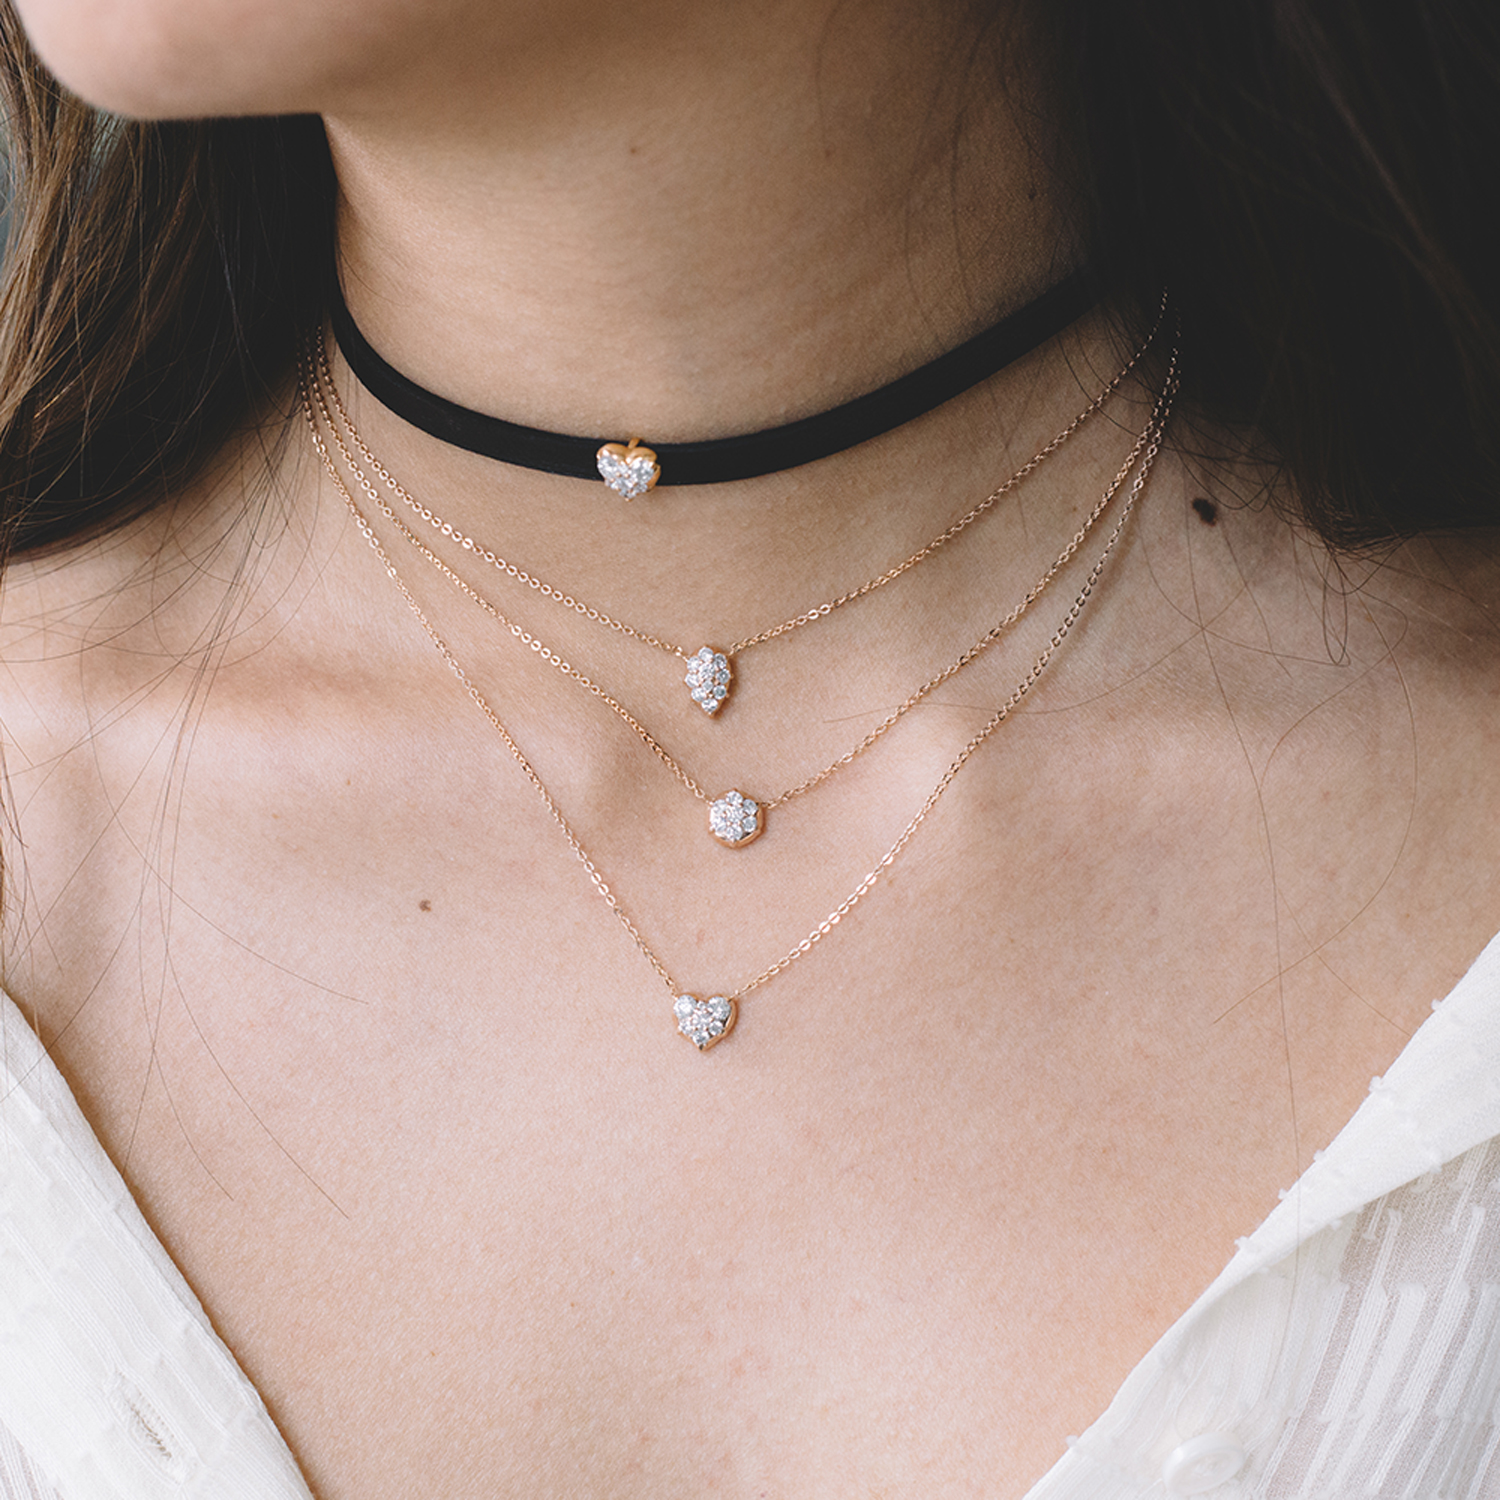 Best Women's Black Choker Necklaces Selection | Jewelry Jealousy